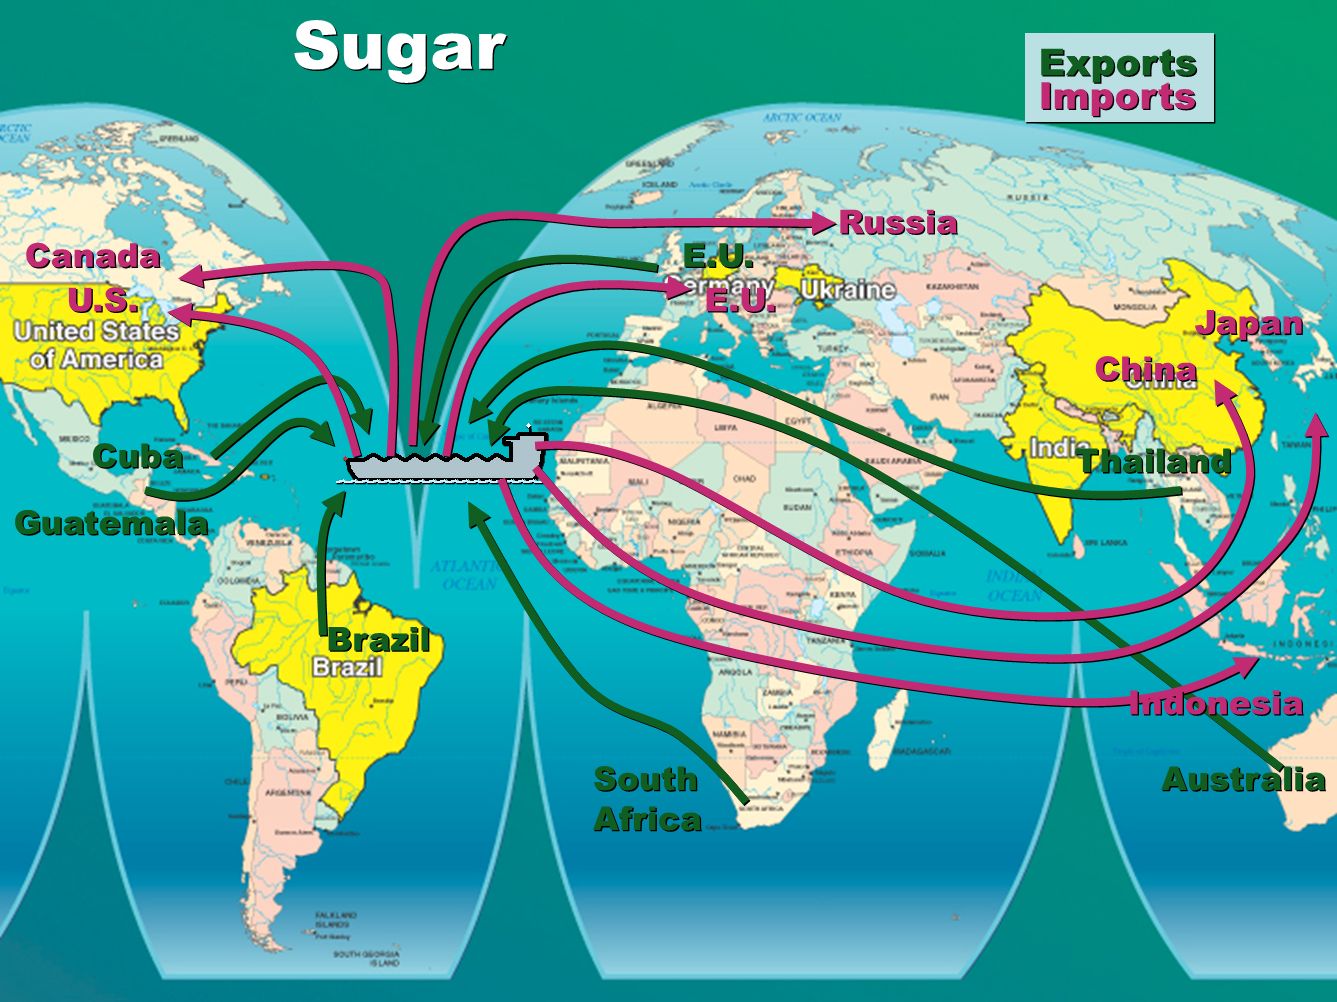 Sugar Exports Imports Brazil Thailand Australia Cuba Guatemala South Africa South Africa Russia E.U.